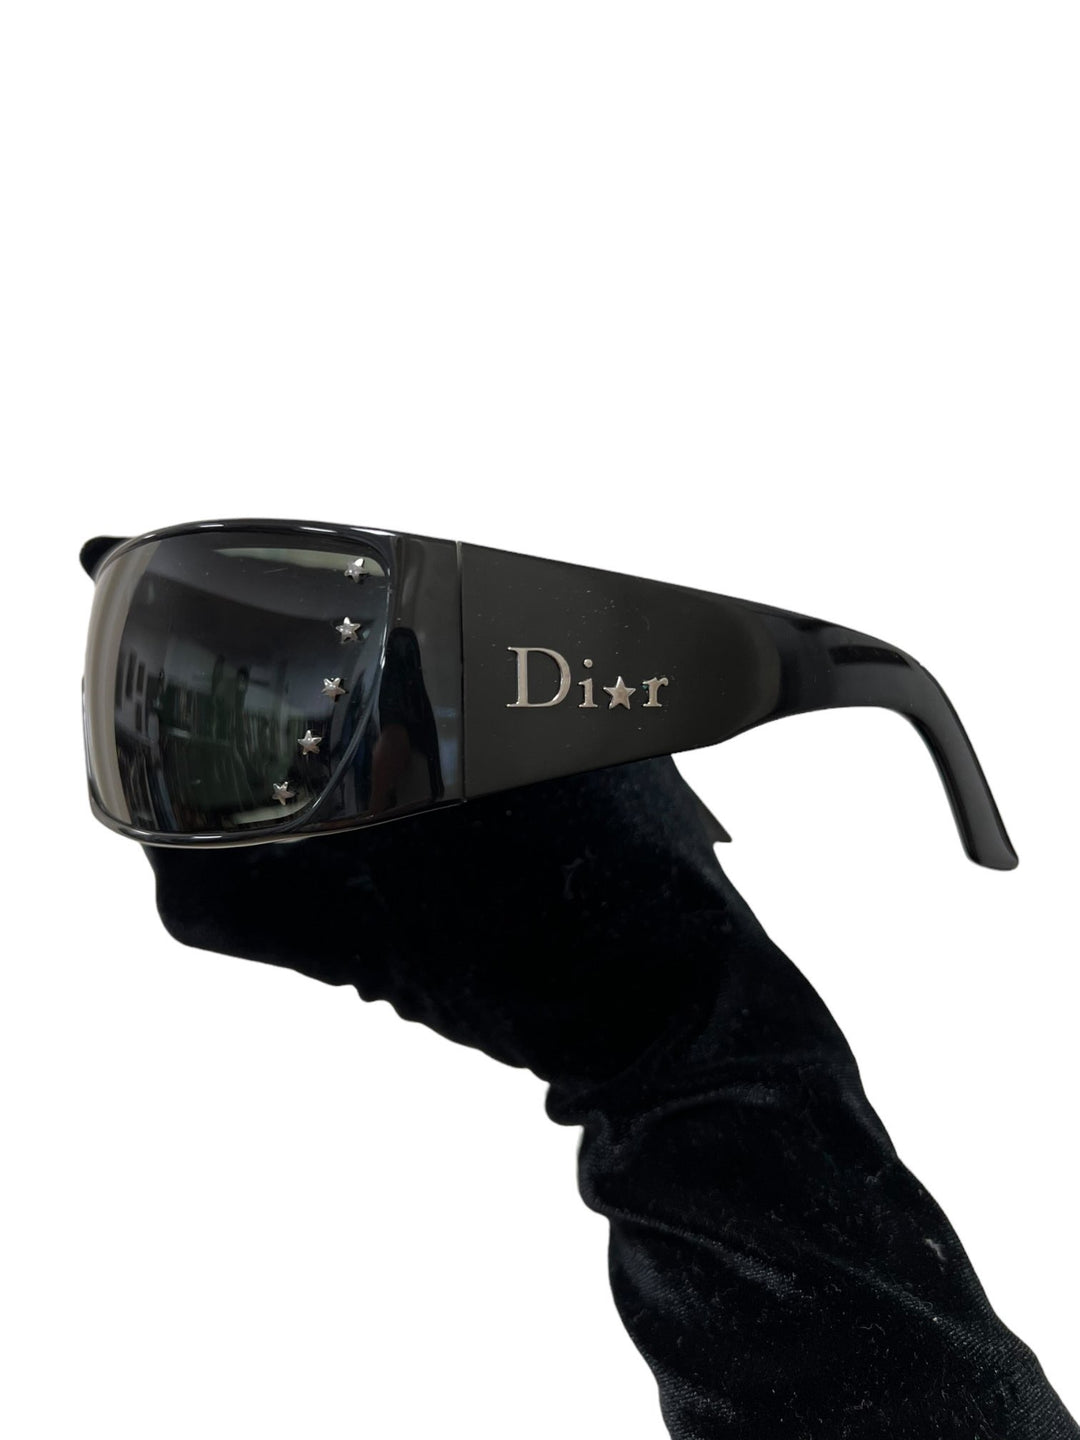 Christian Dior by John Galliano Stelle sunglasses